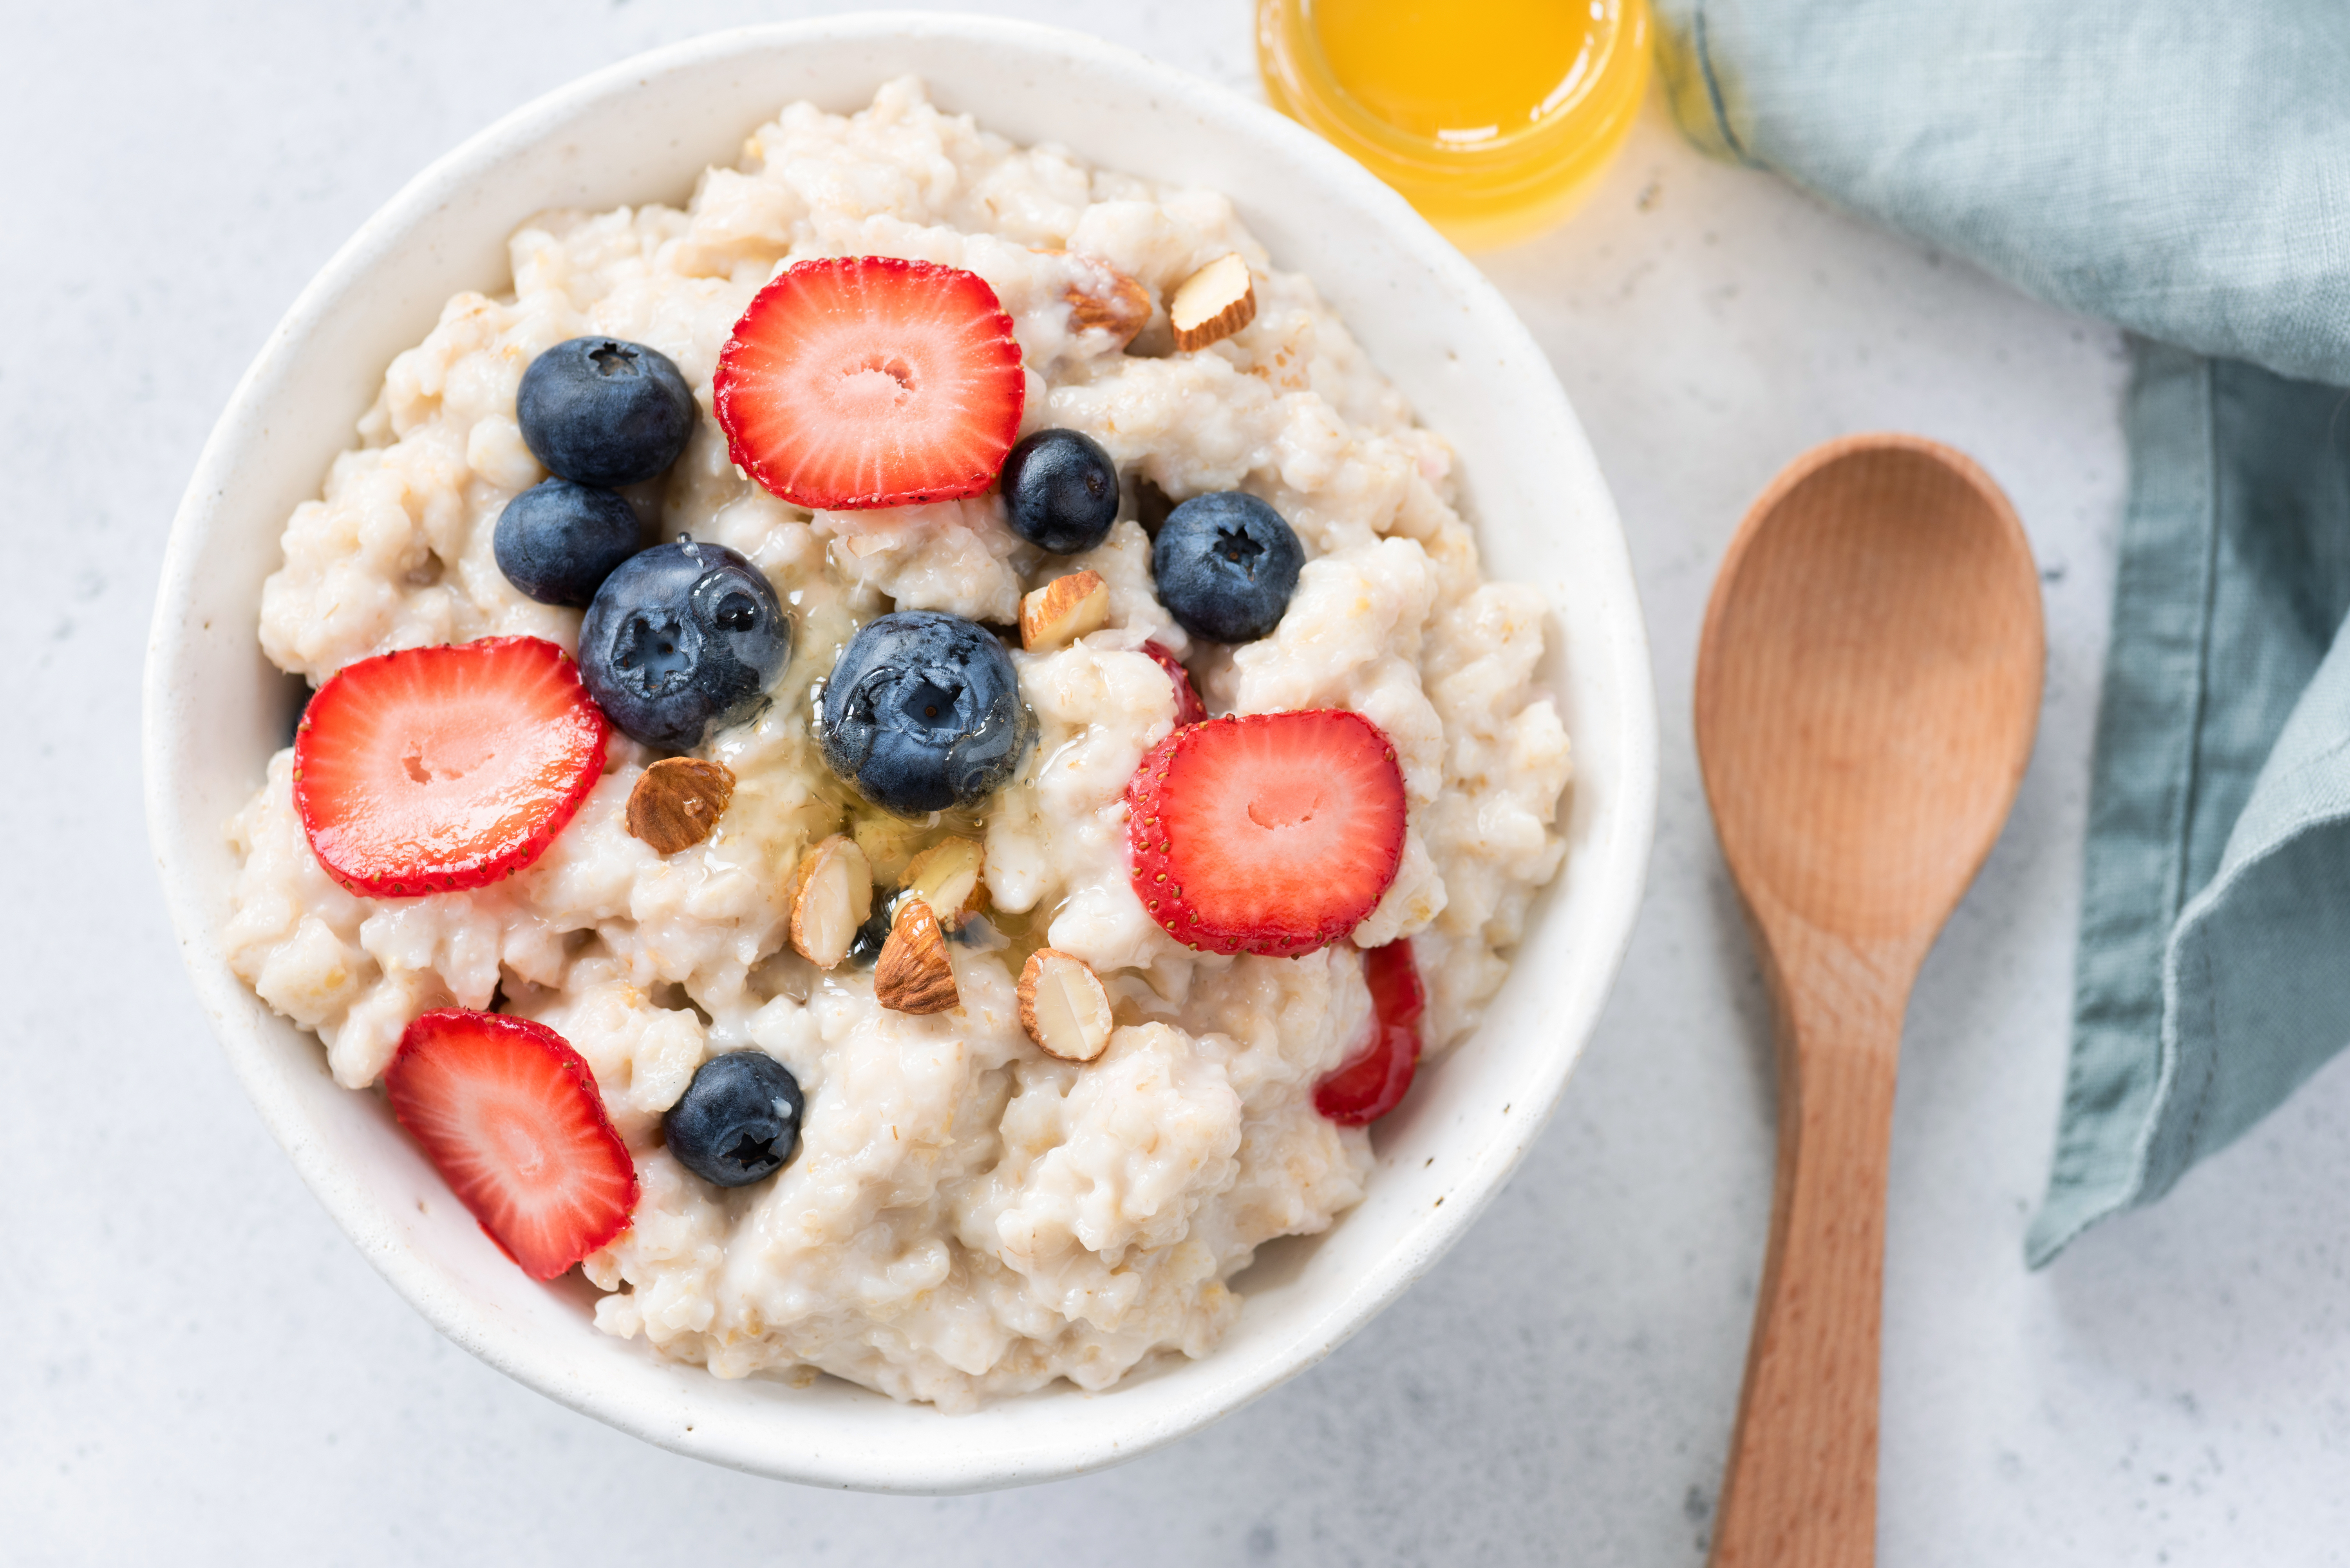 healthy breakfast food chart